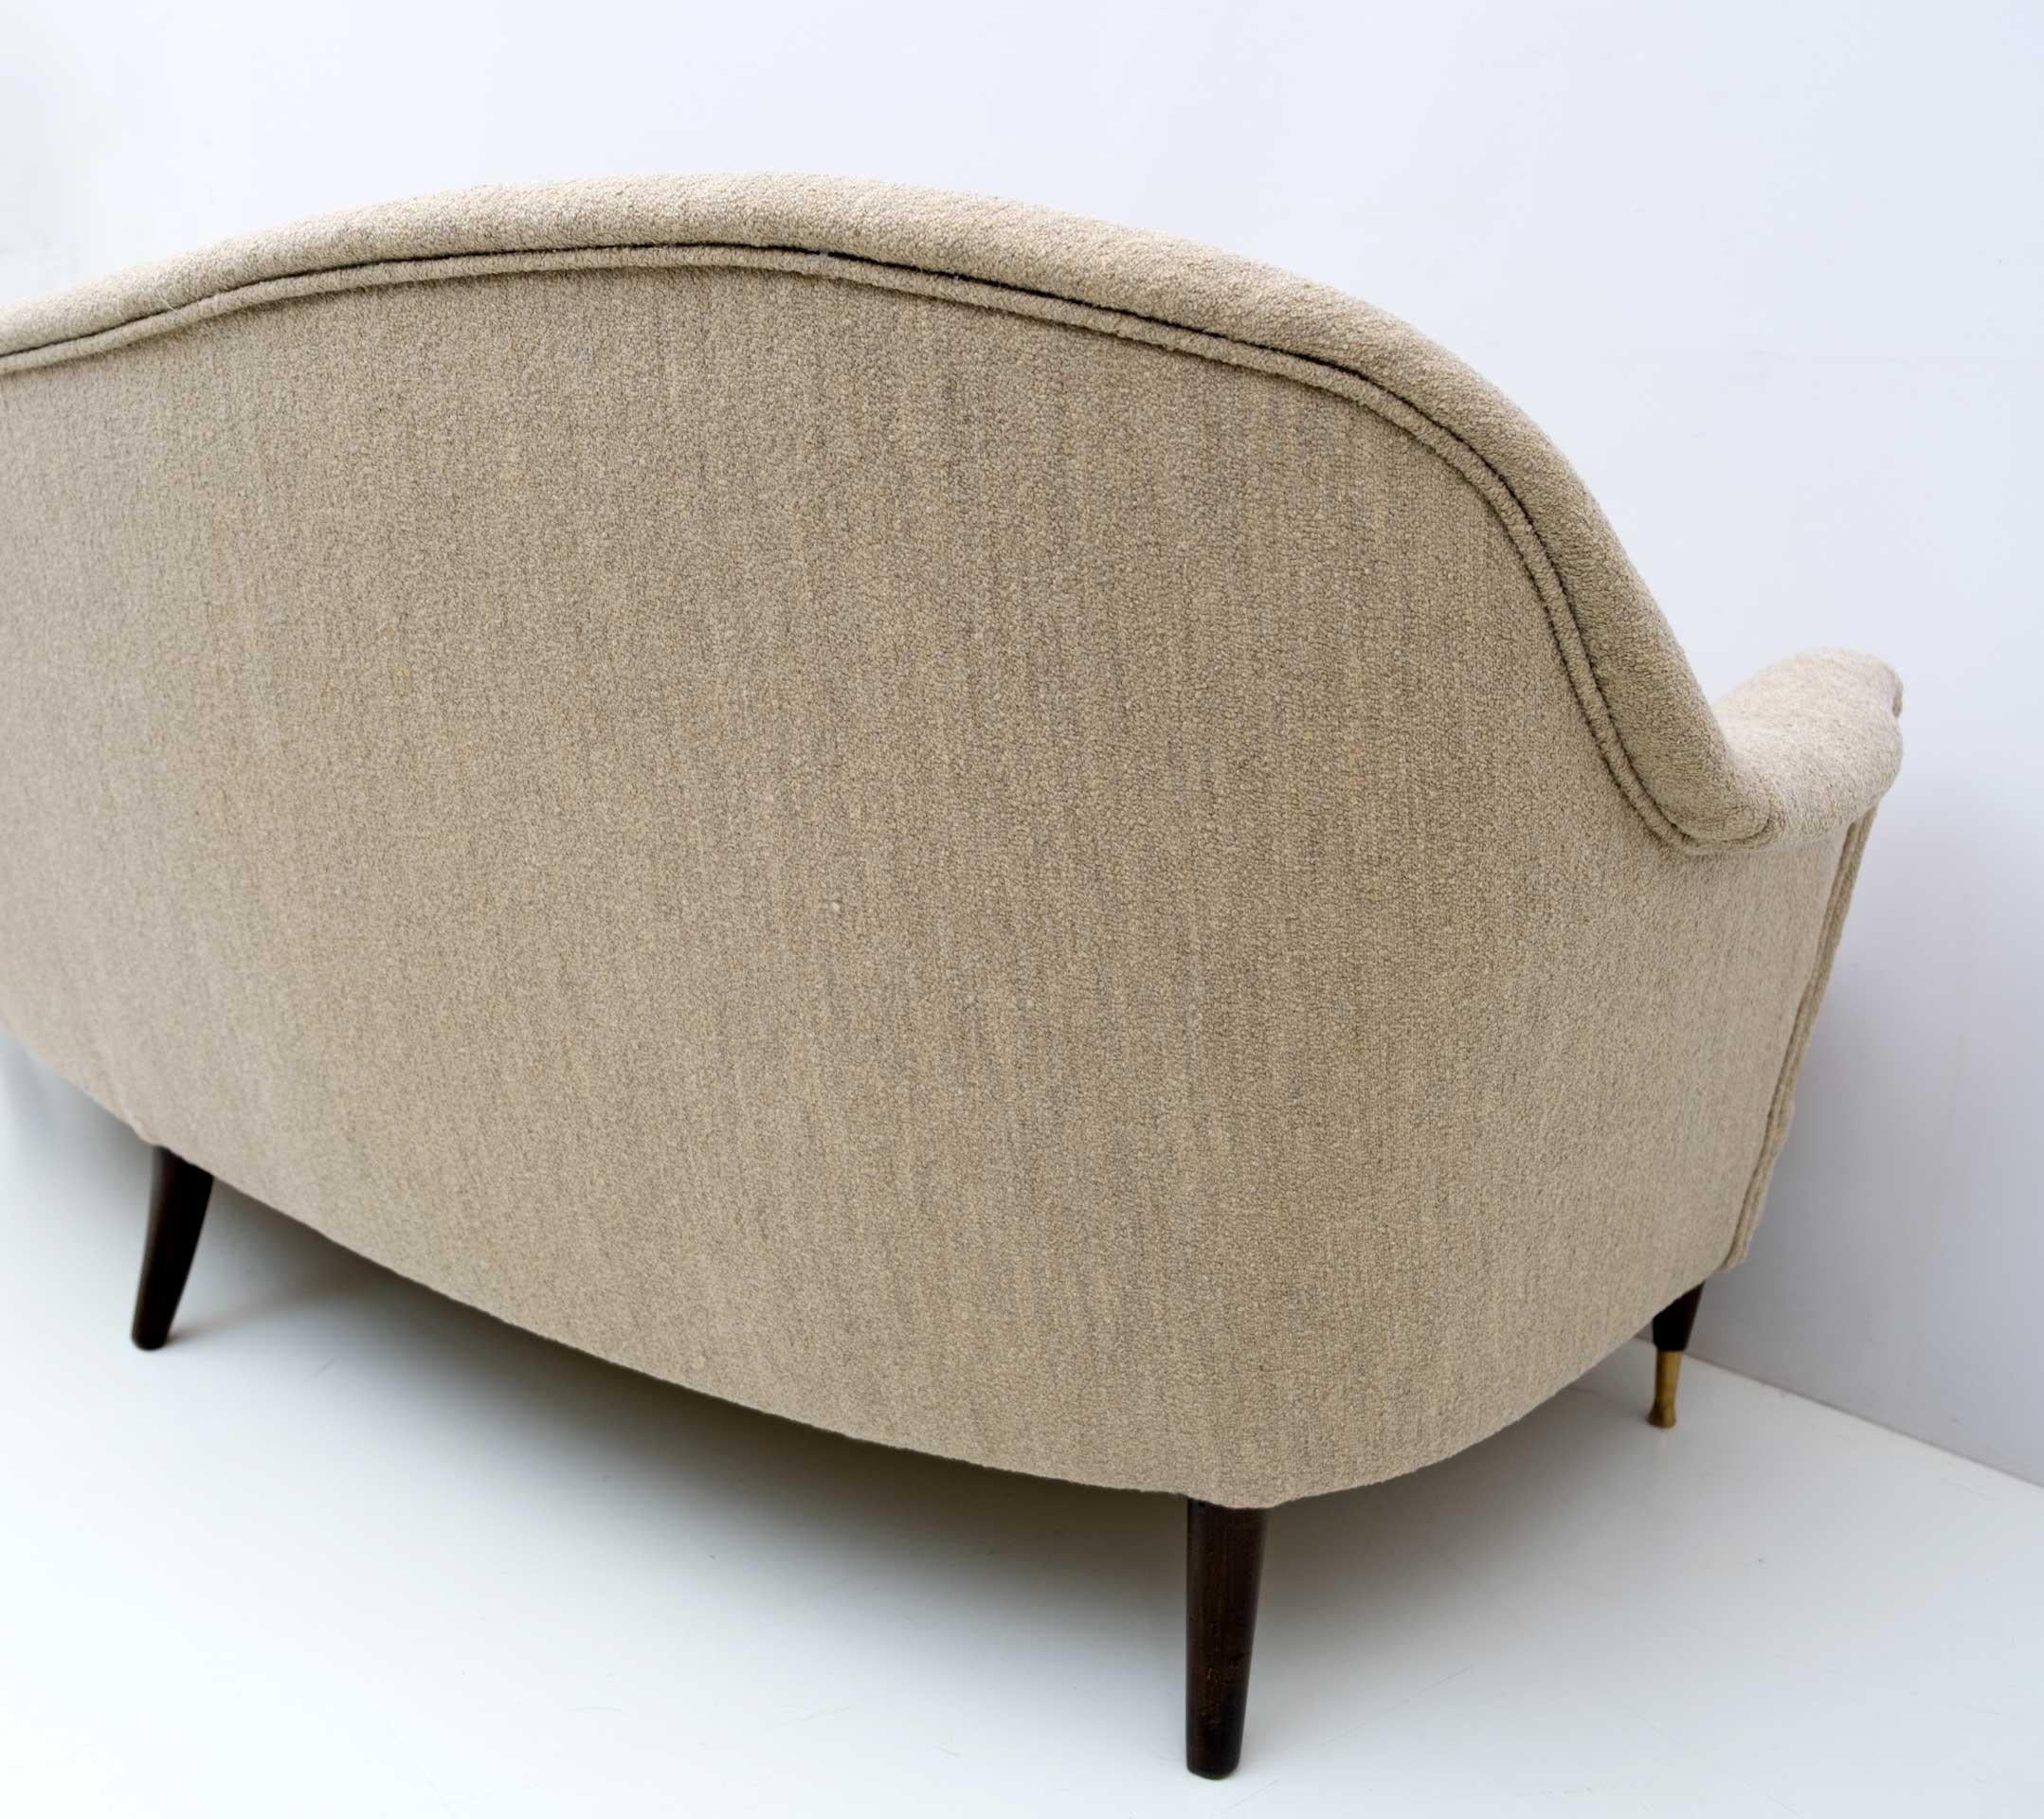 Gio Ponti Style Mid-Century Modern Italian Sofa for Isa Bergamo, 50s For Sale 2